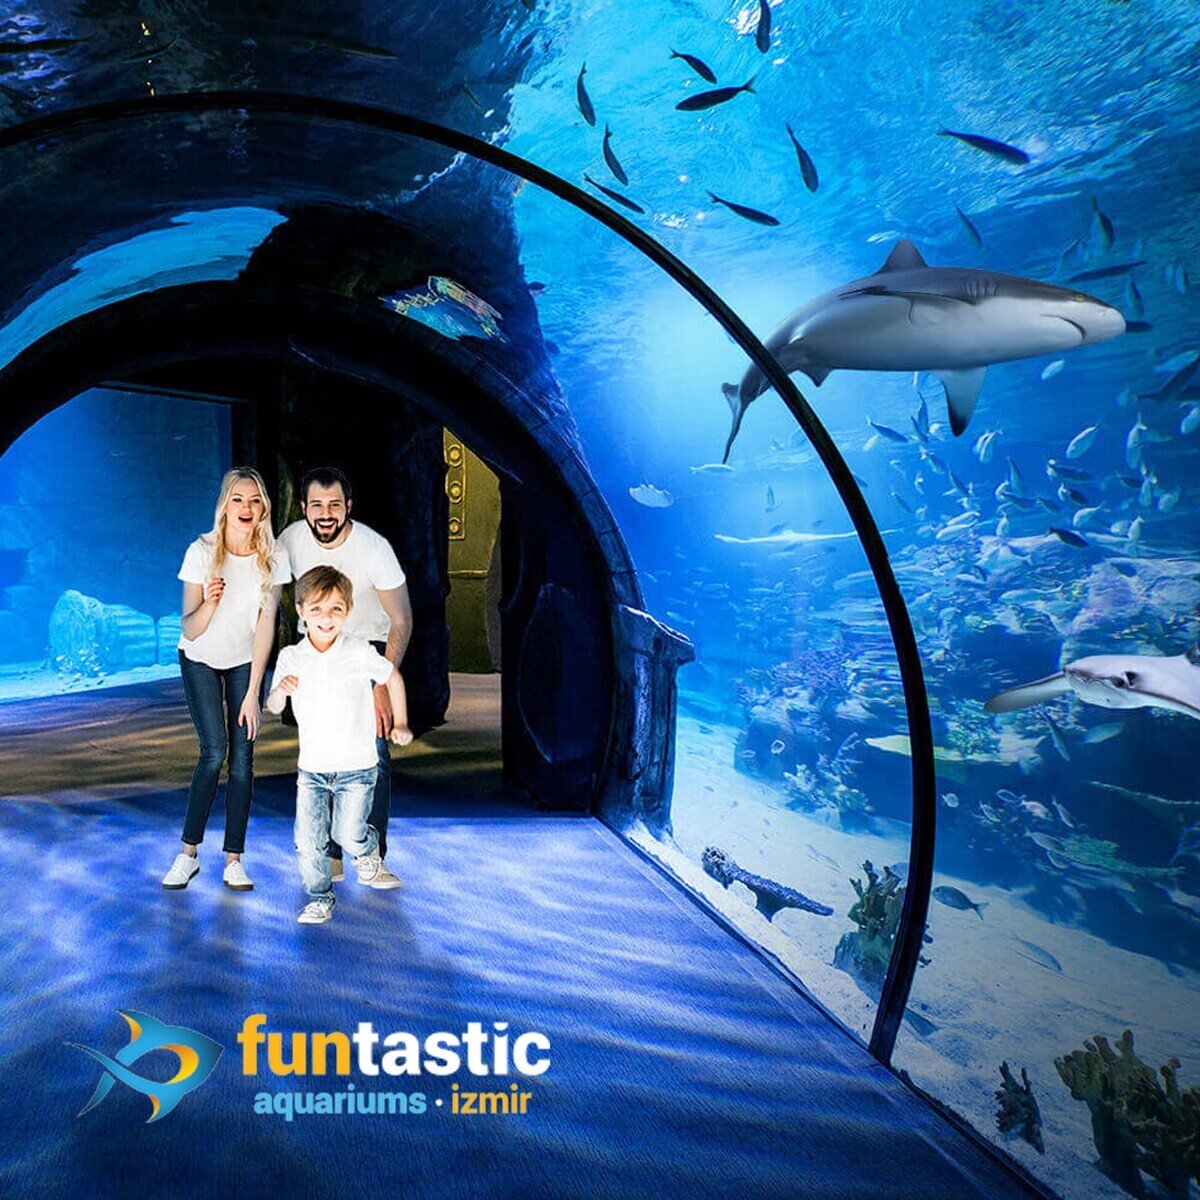 Funtastic Aquariums İzmir Giriş Bileti